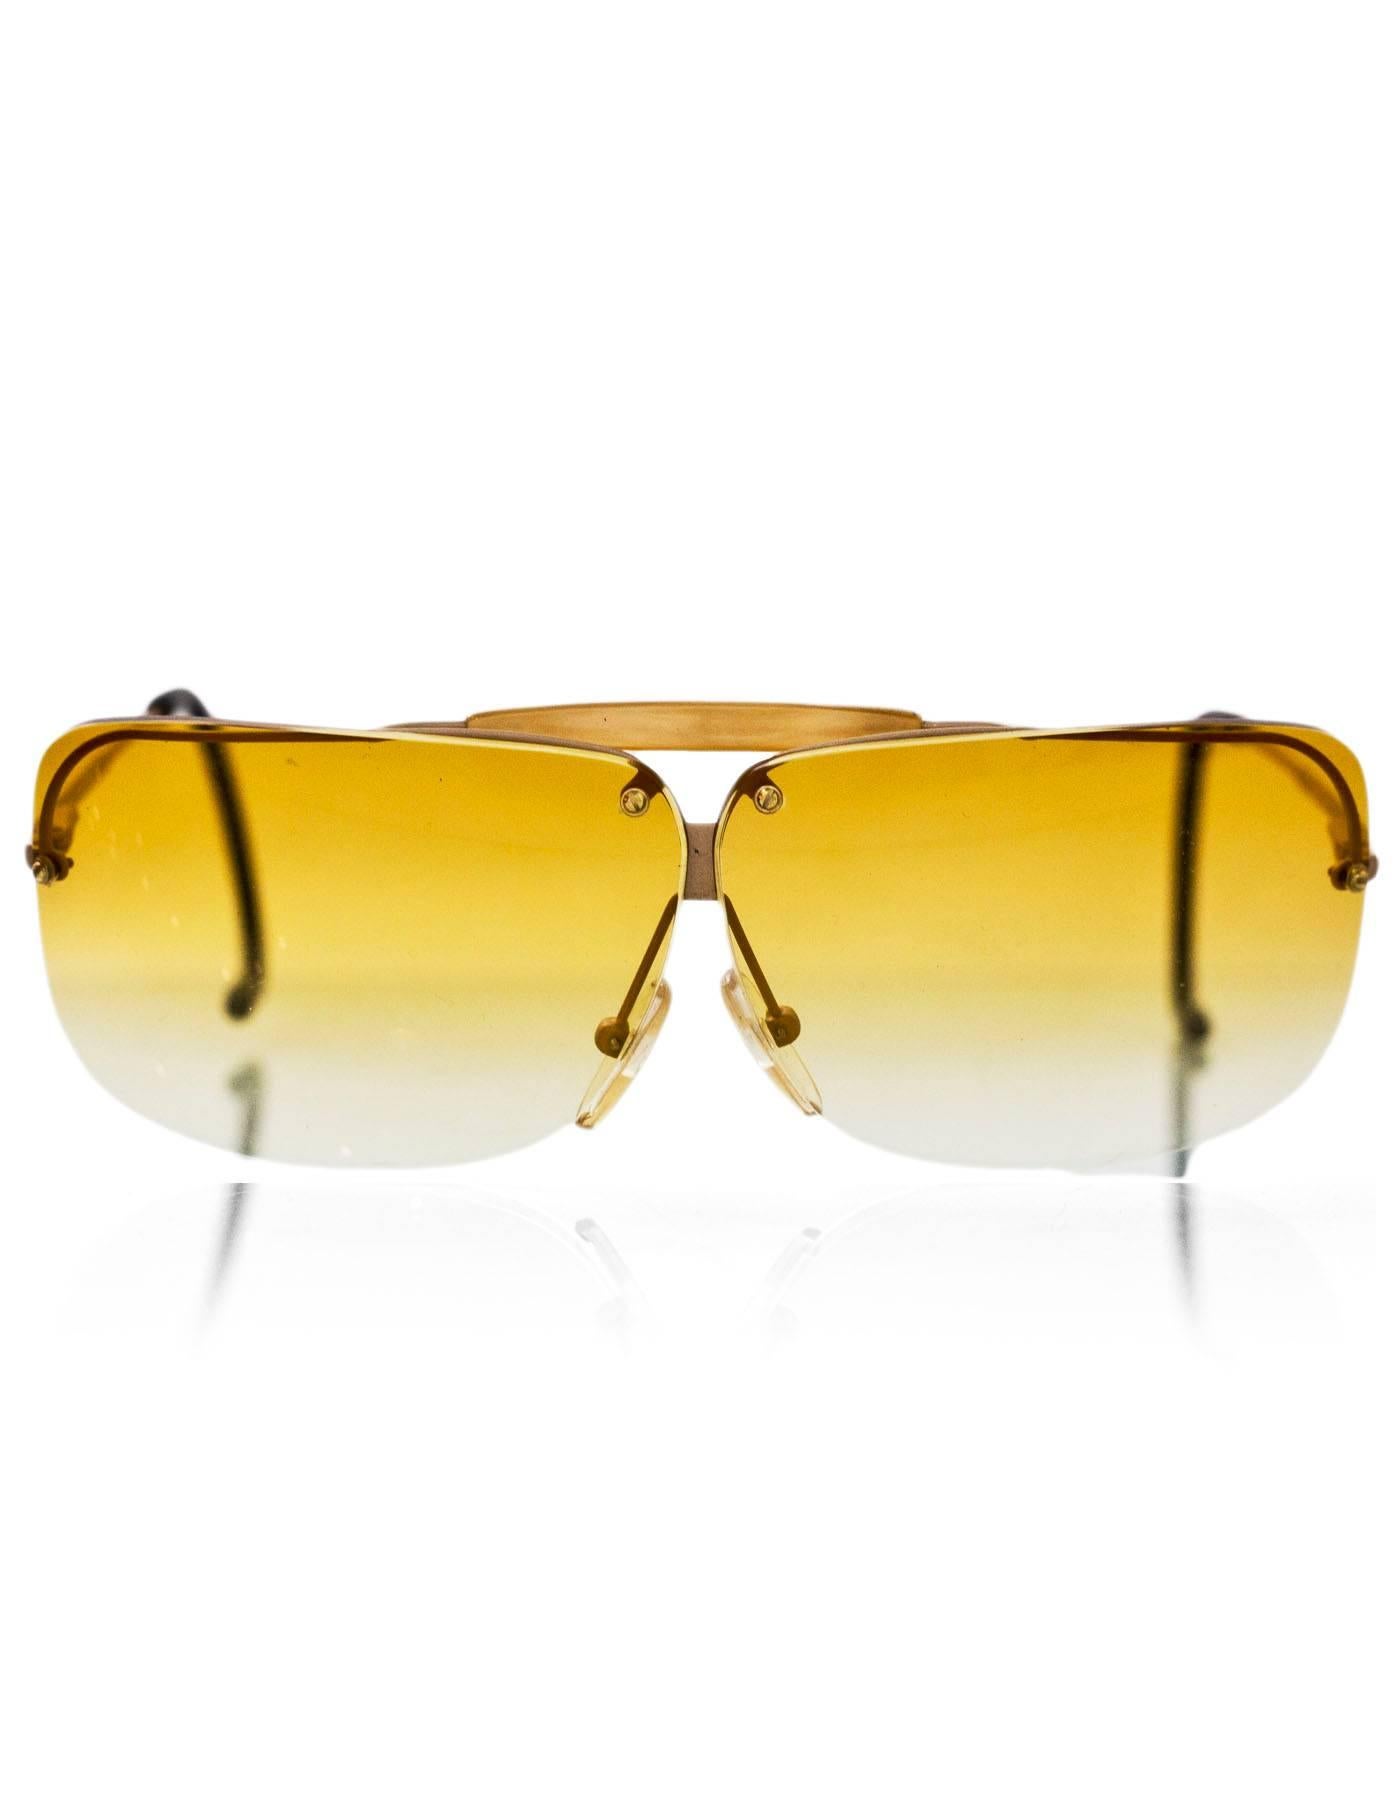 vintage yellow sunglasses